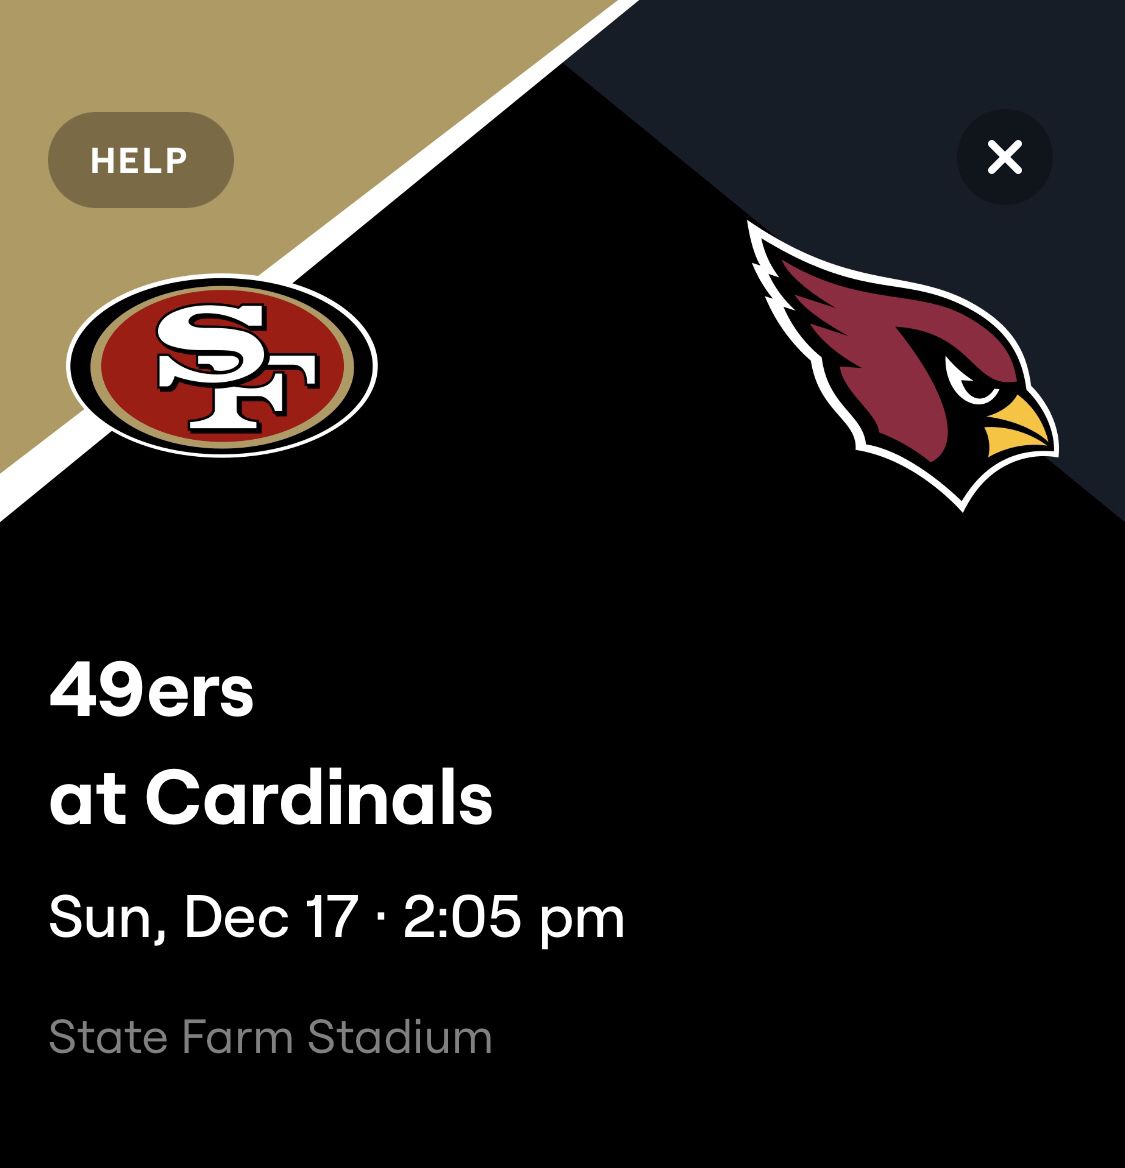 49ers vs cardinals tickets